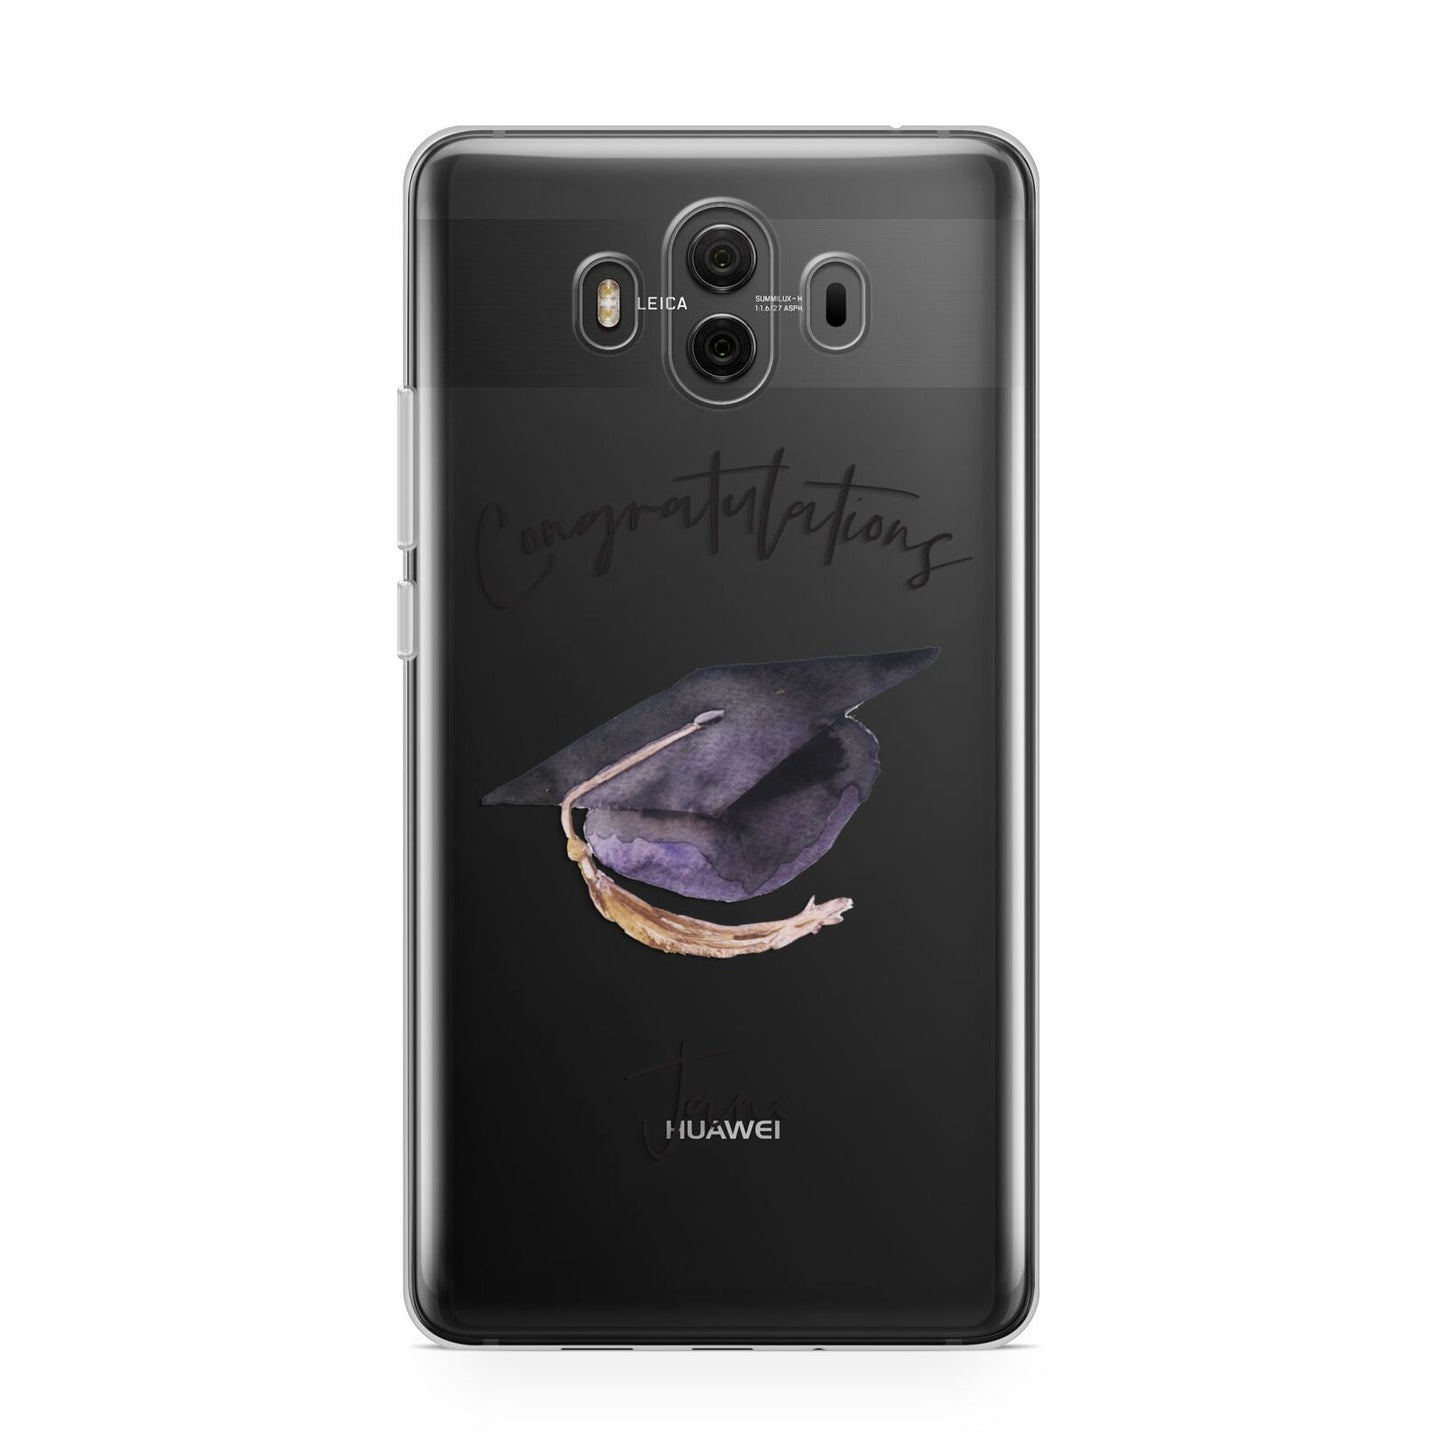 Congratulations Graduate Custom Huawei Mate 10 Protective Phone Case